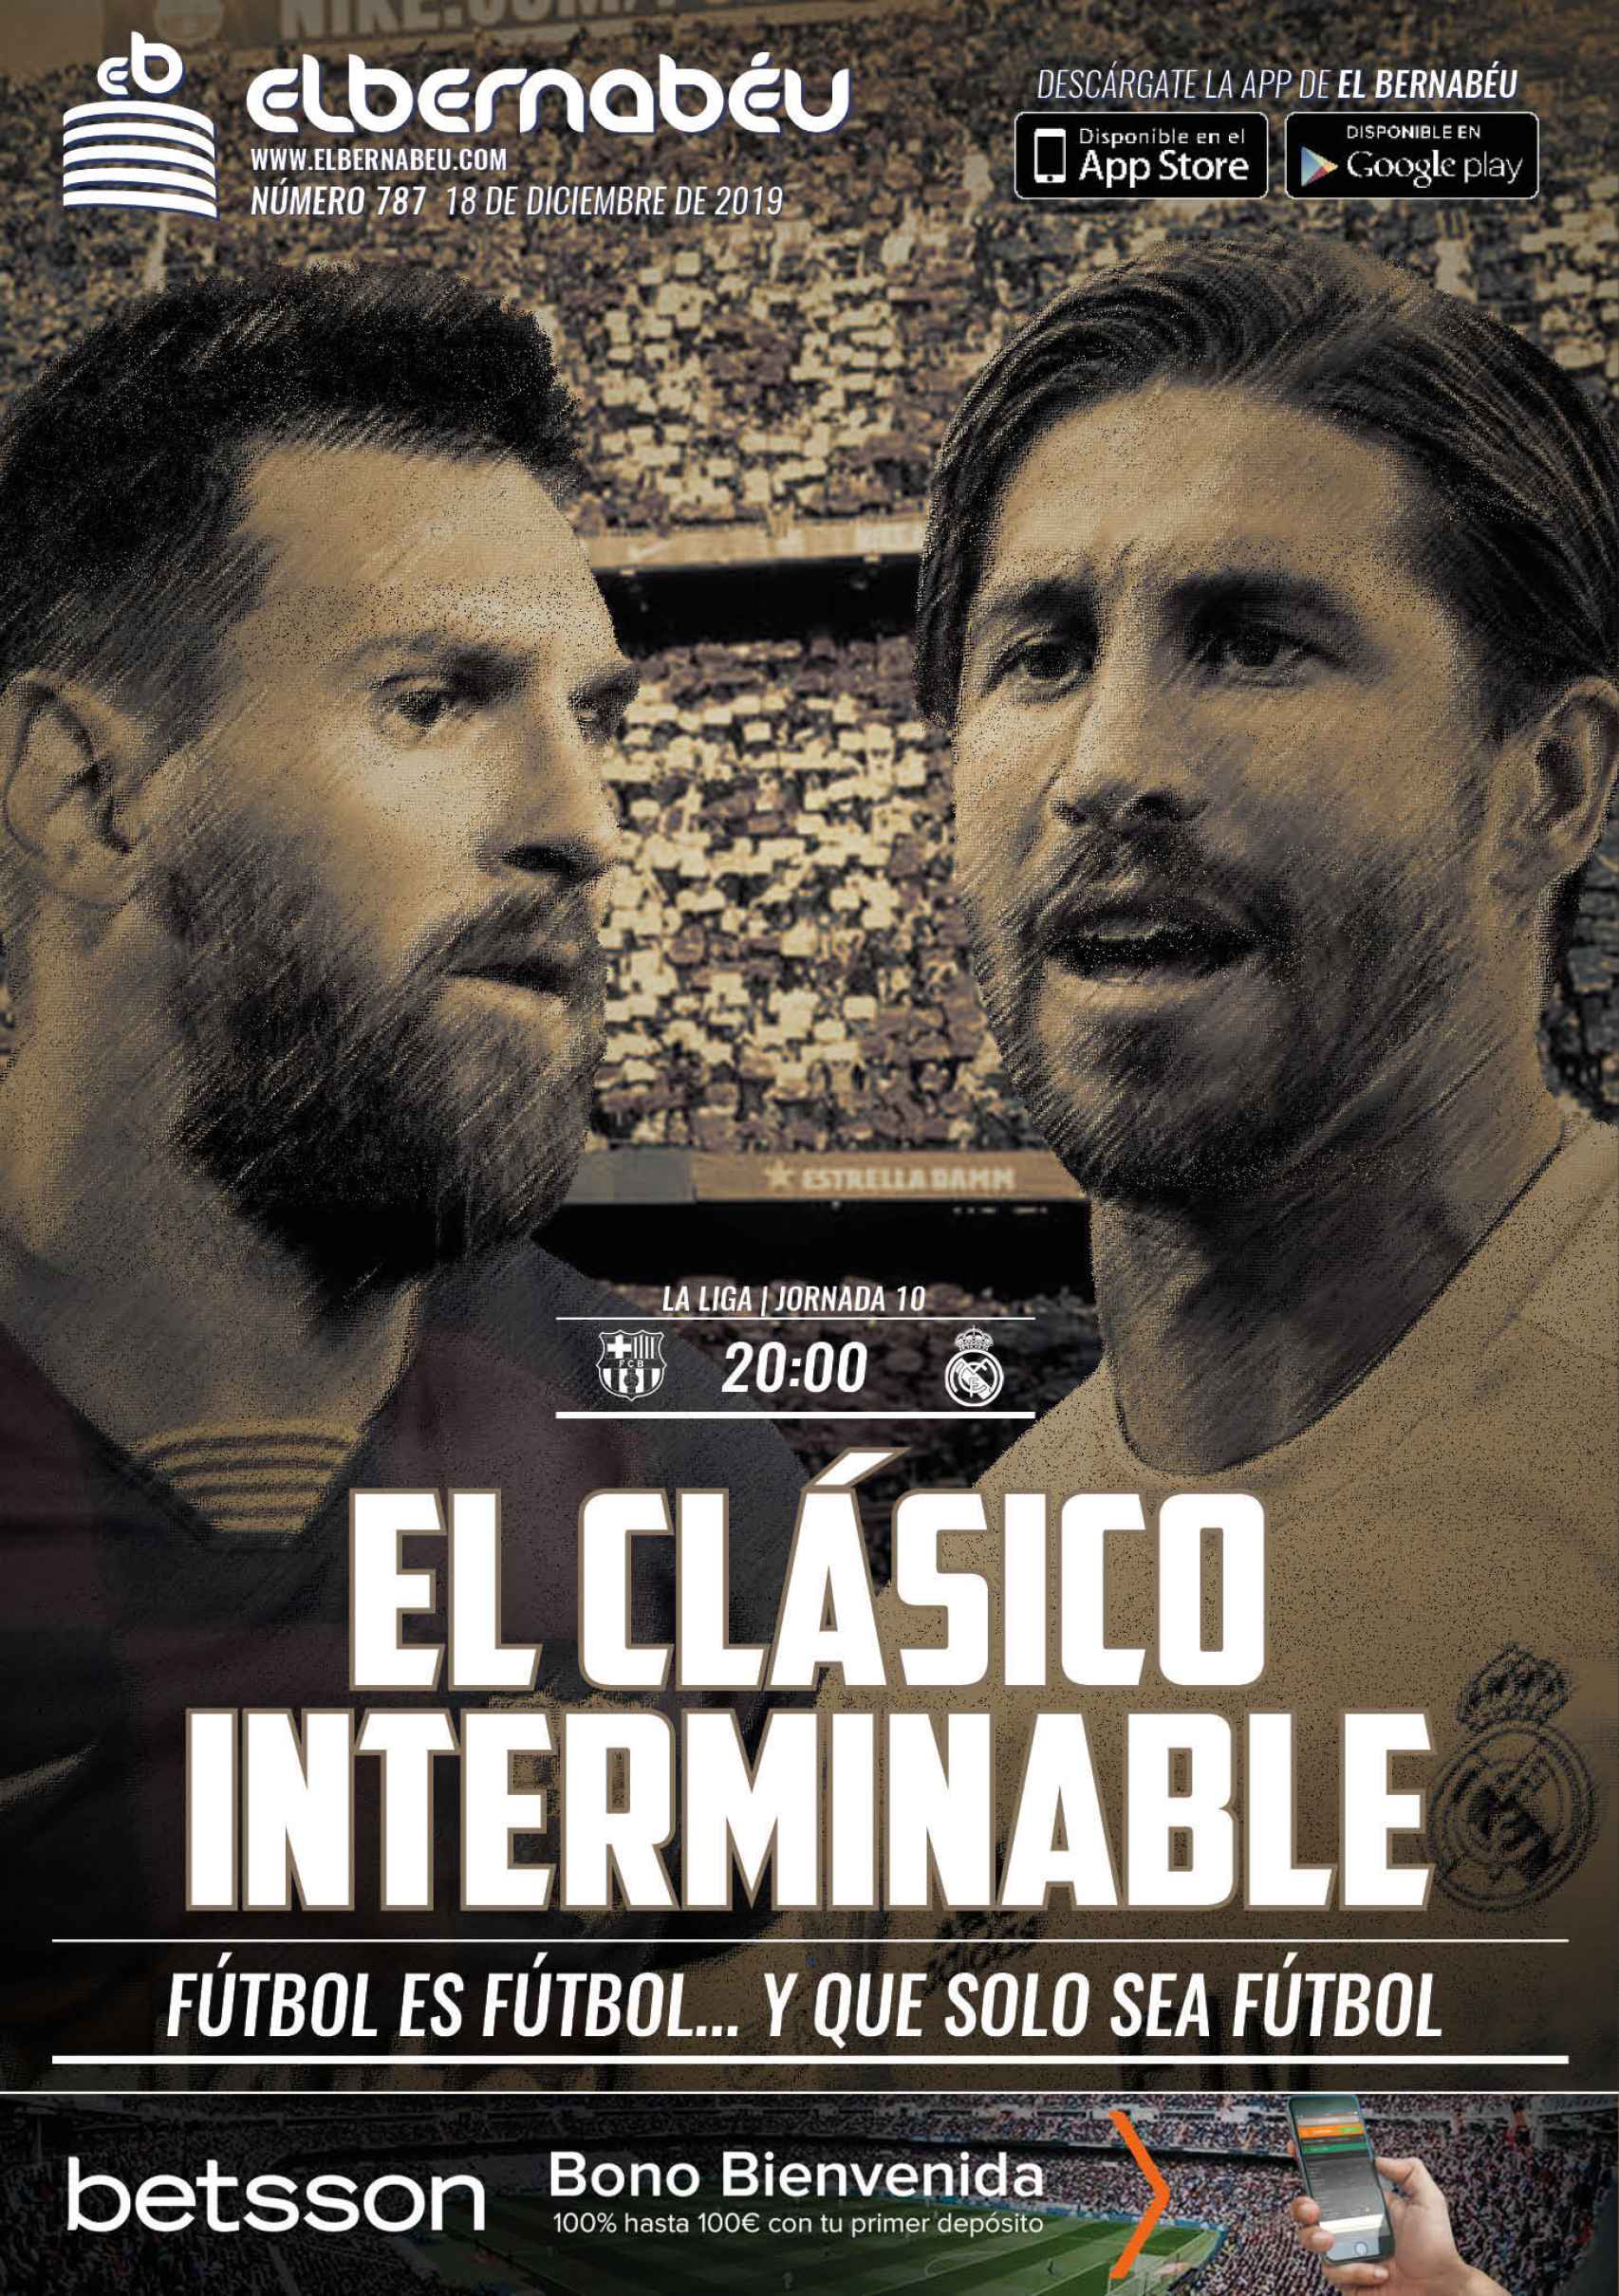 La portada de El Bernabéu (18/12/2019)